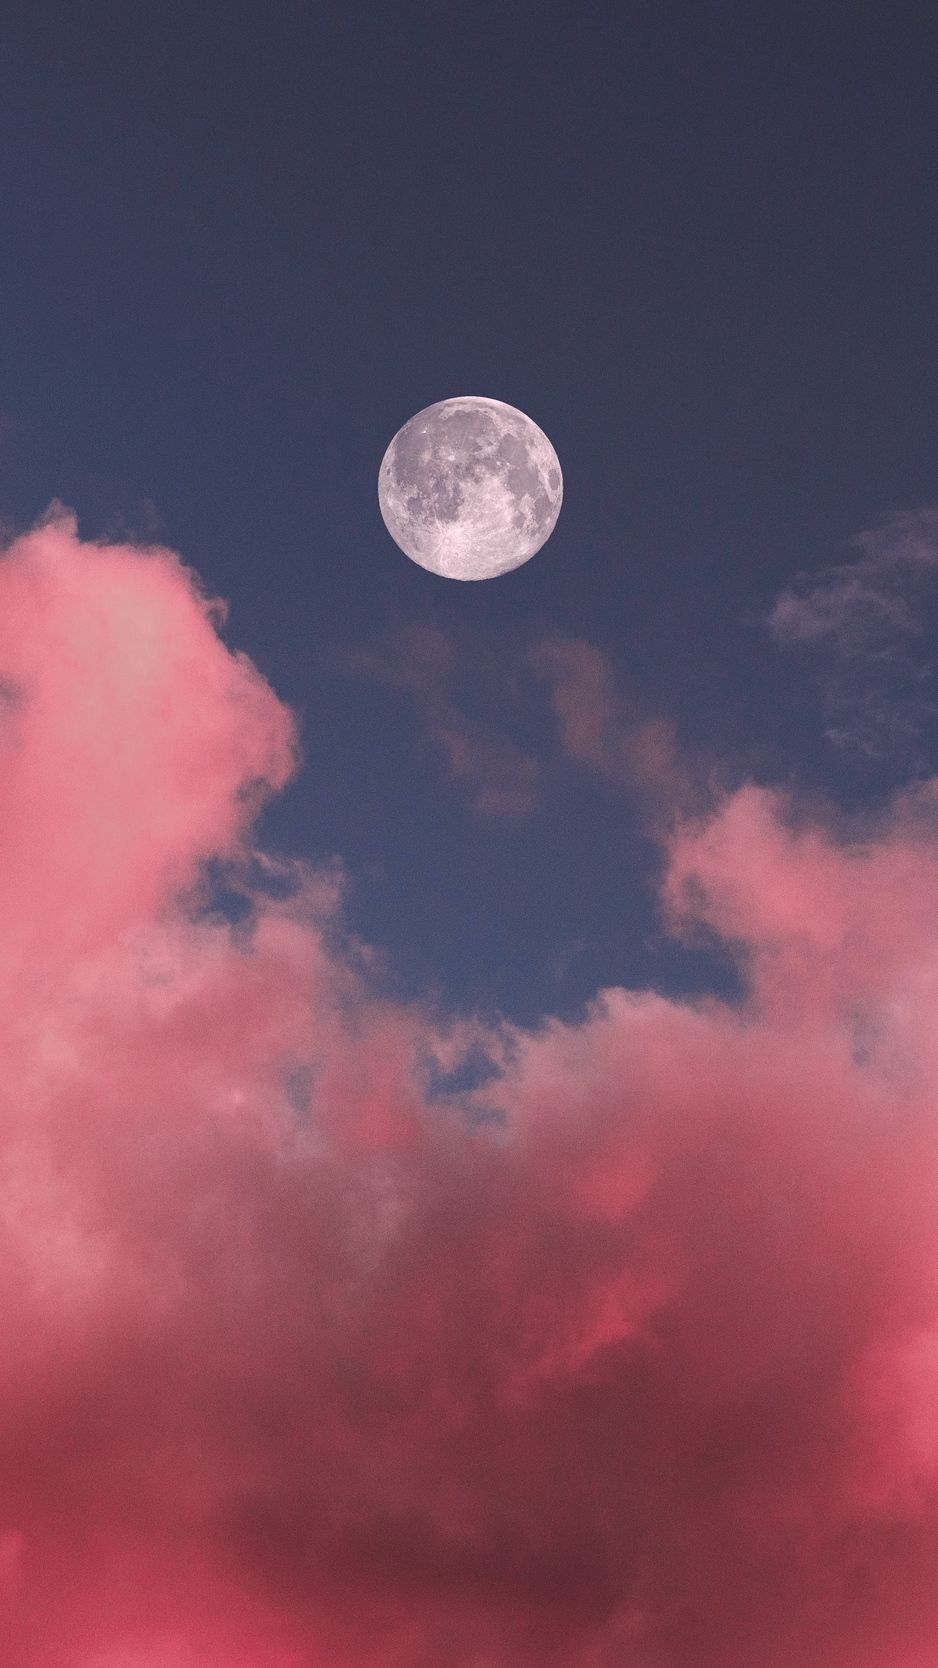 Download wallpaper 938x1668 moon, clouds, pink, sky, full moon